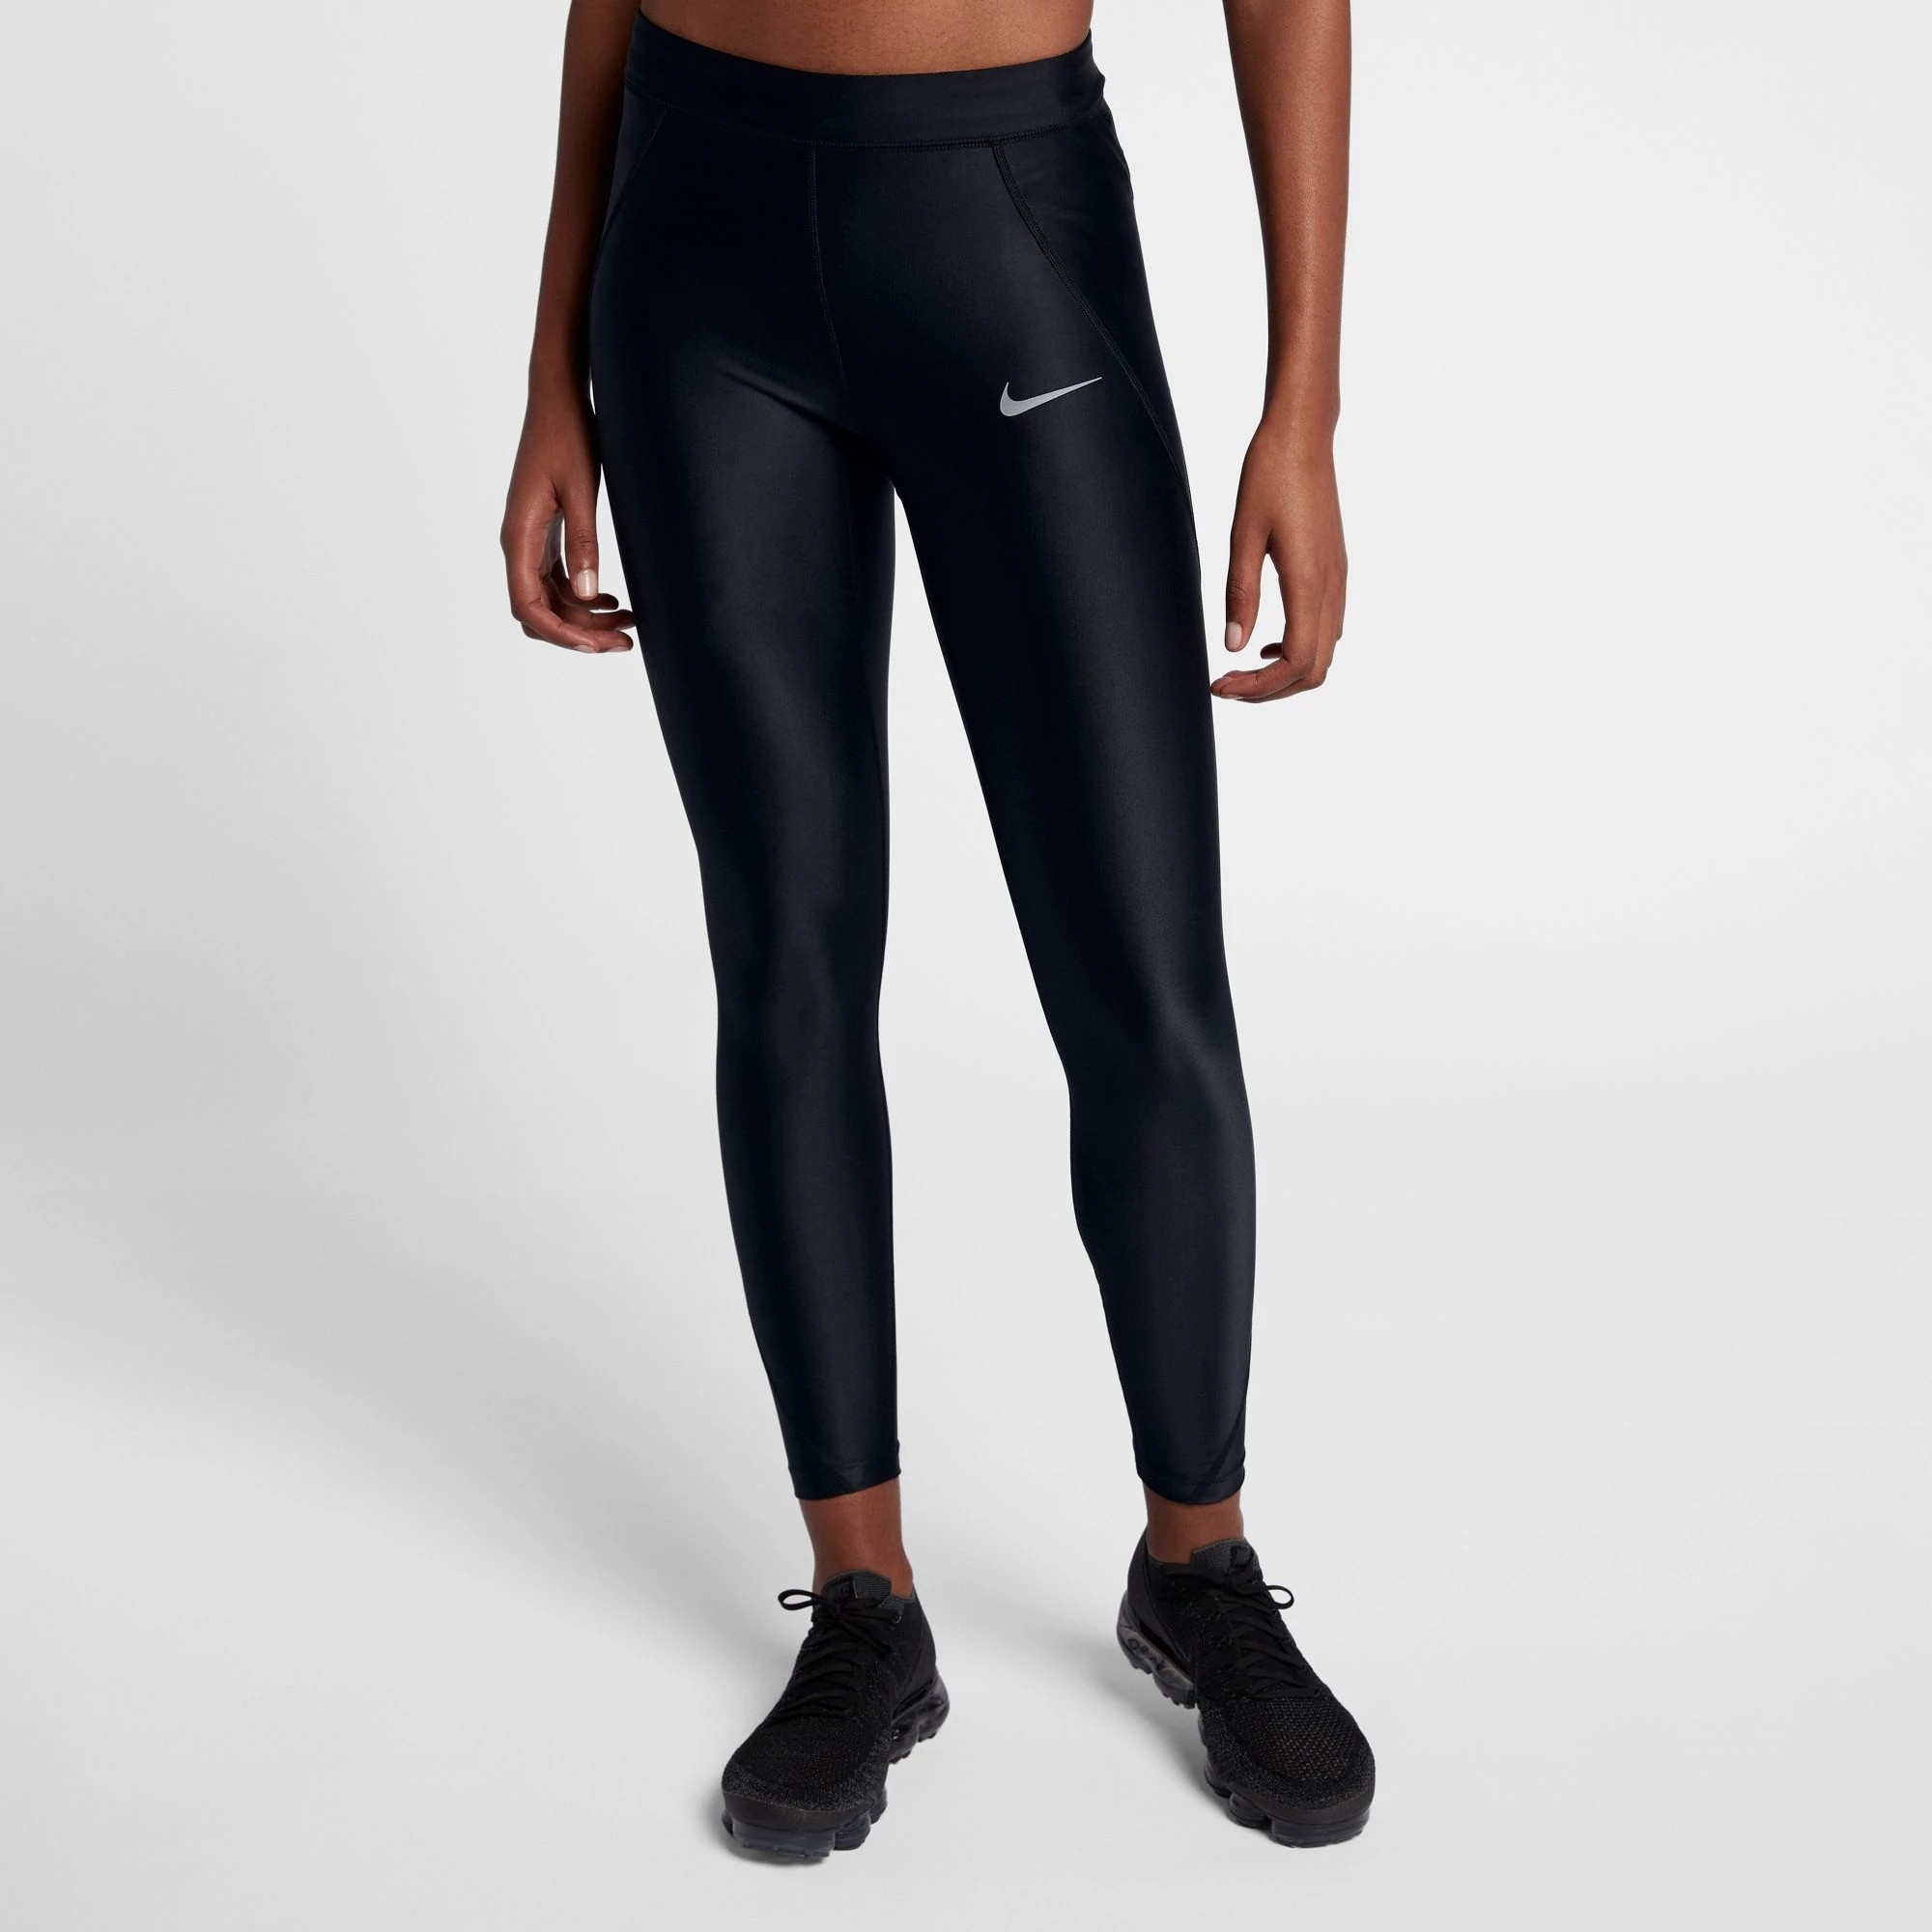 Womens Nike Power Speed 7/8 Tight Leggings Pants